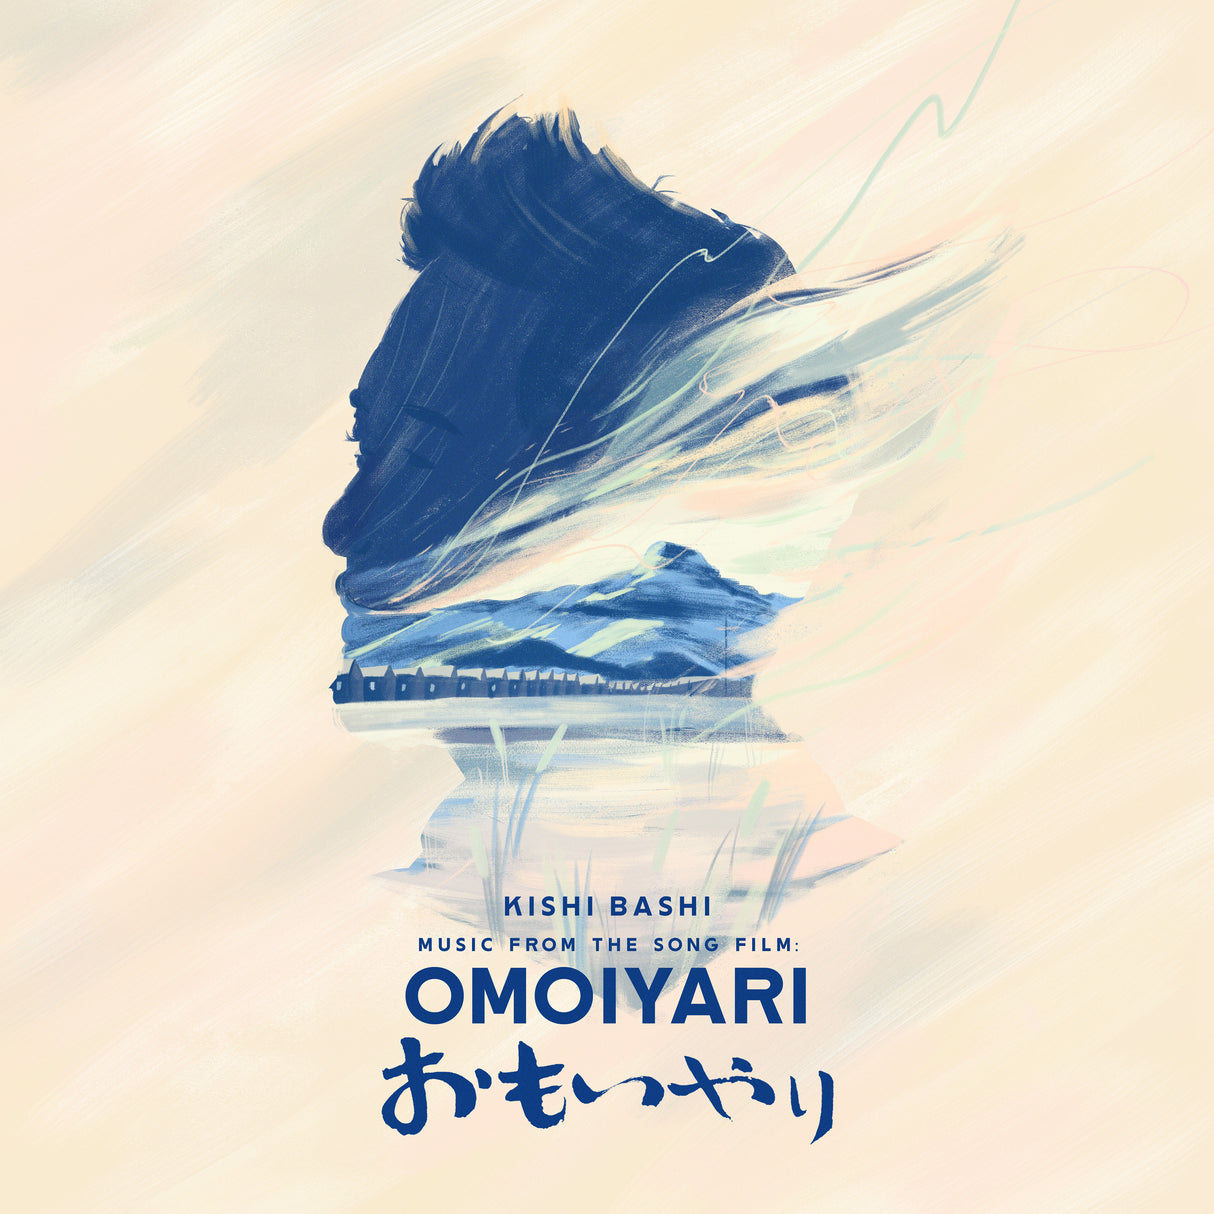 Music from the Song Film: Omoiyari (2LP Blue & Sky Blue) [Vinyl]